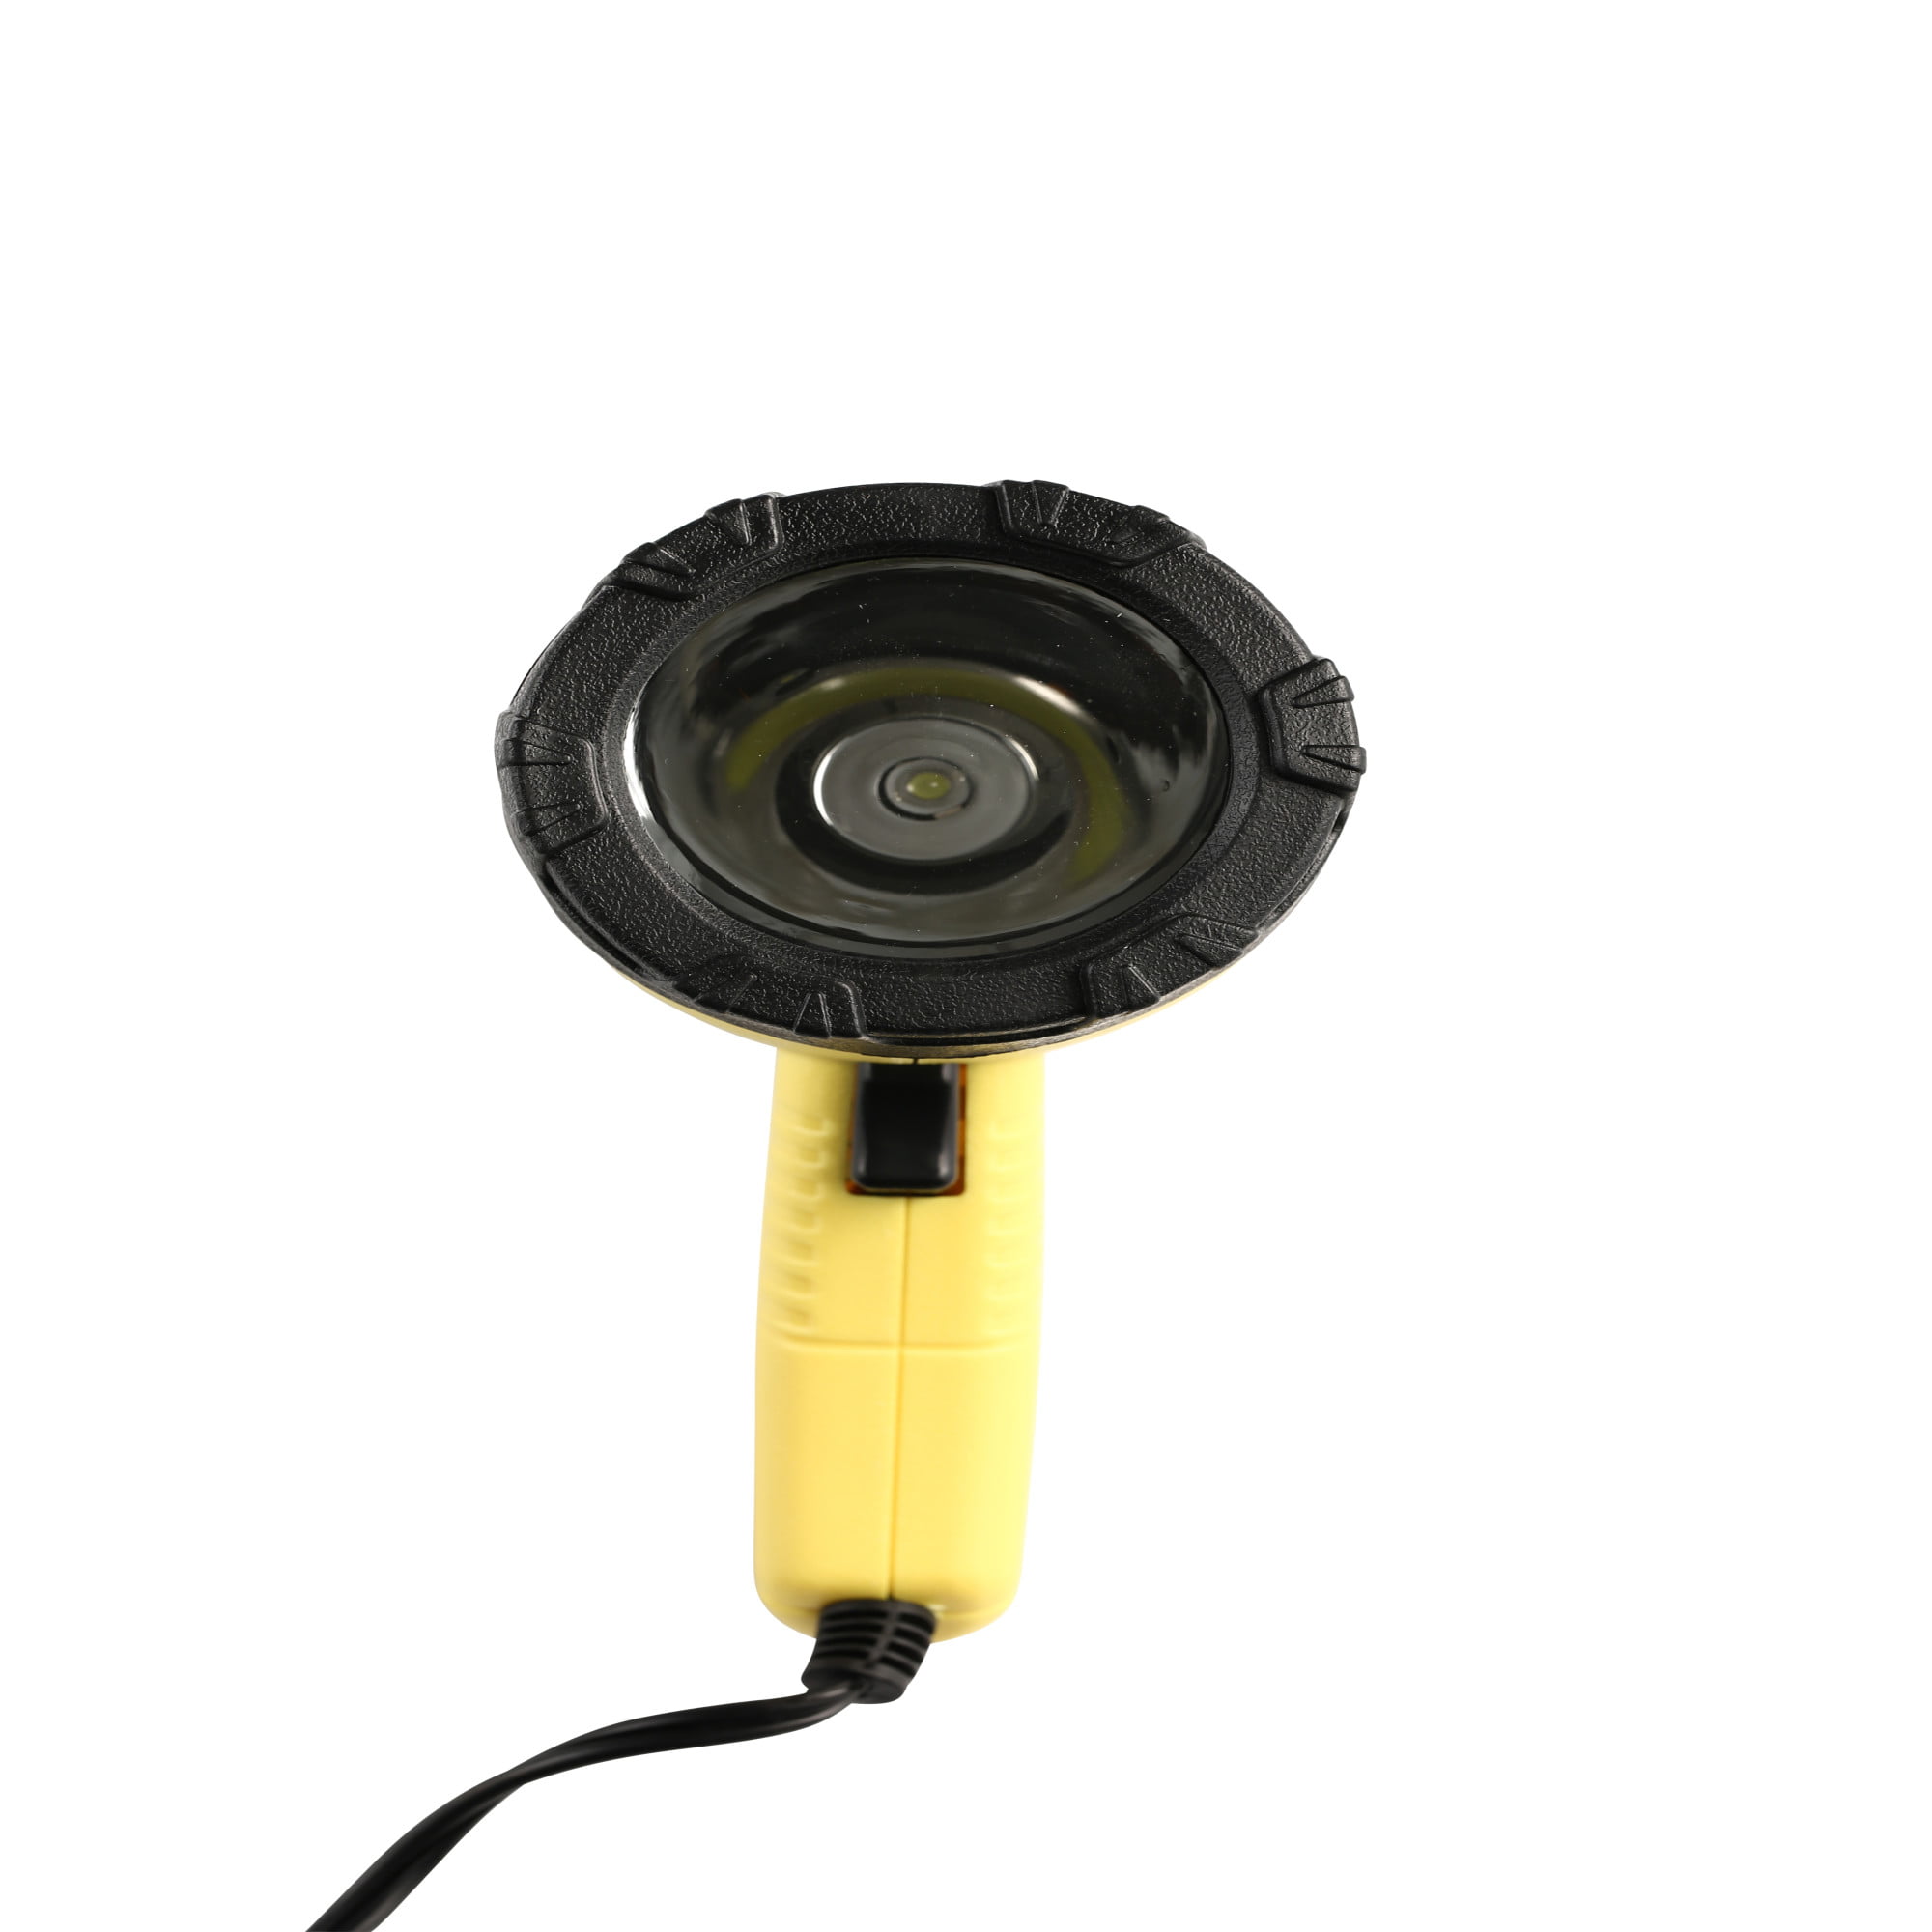 Attwood 11794-7 Portable 5W LED Emergency Spotlight 12V Adapter Plug Safety 